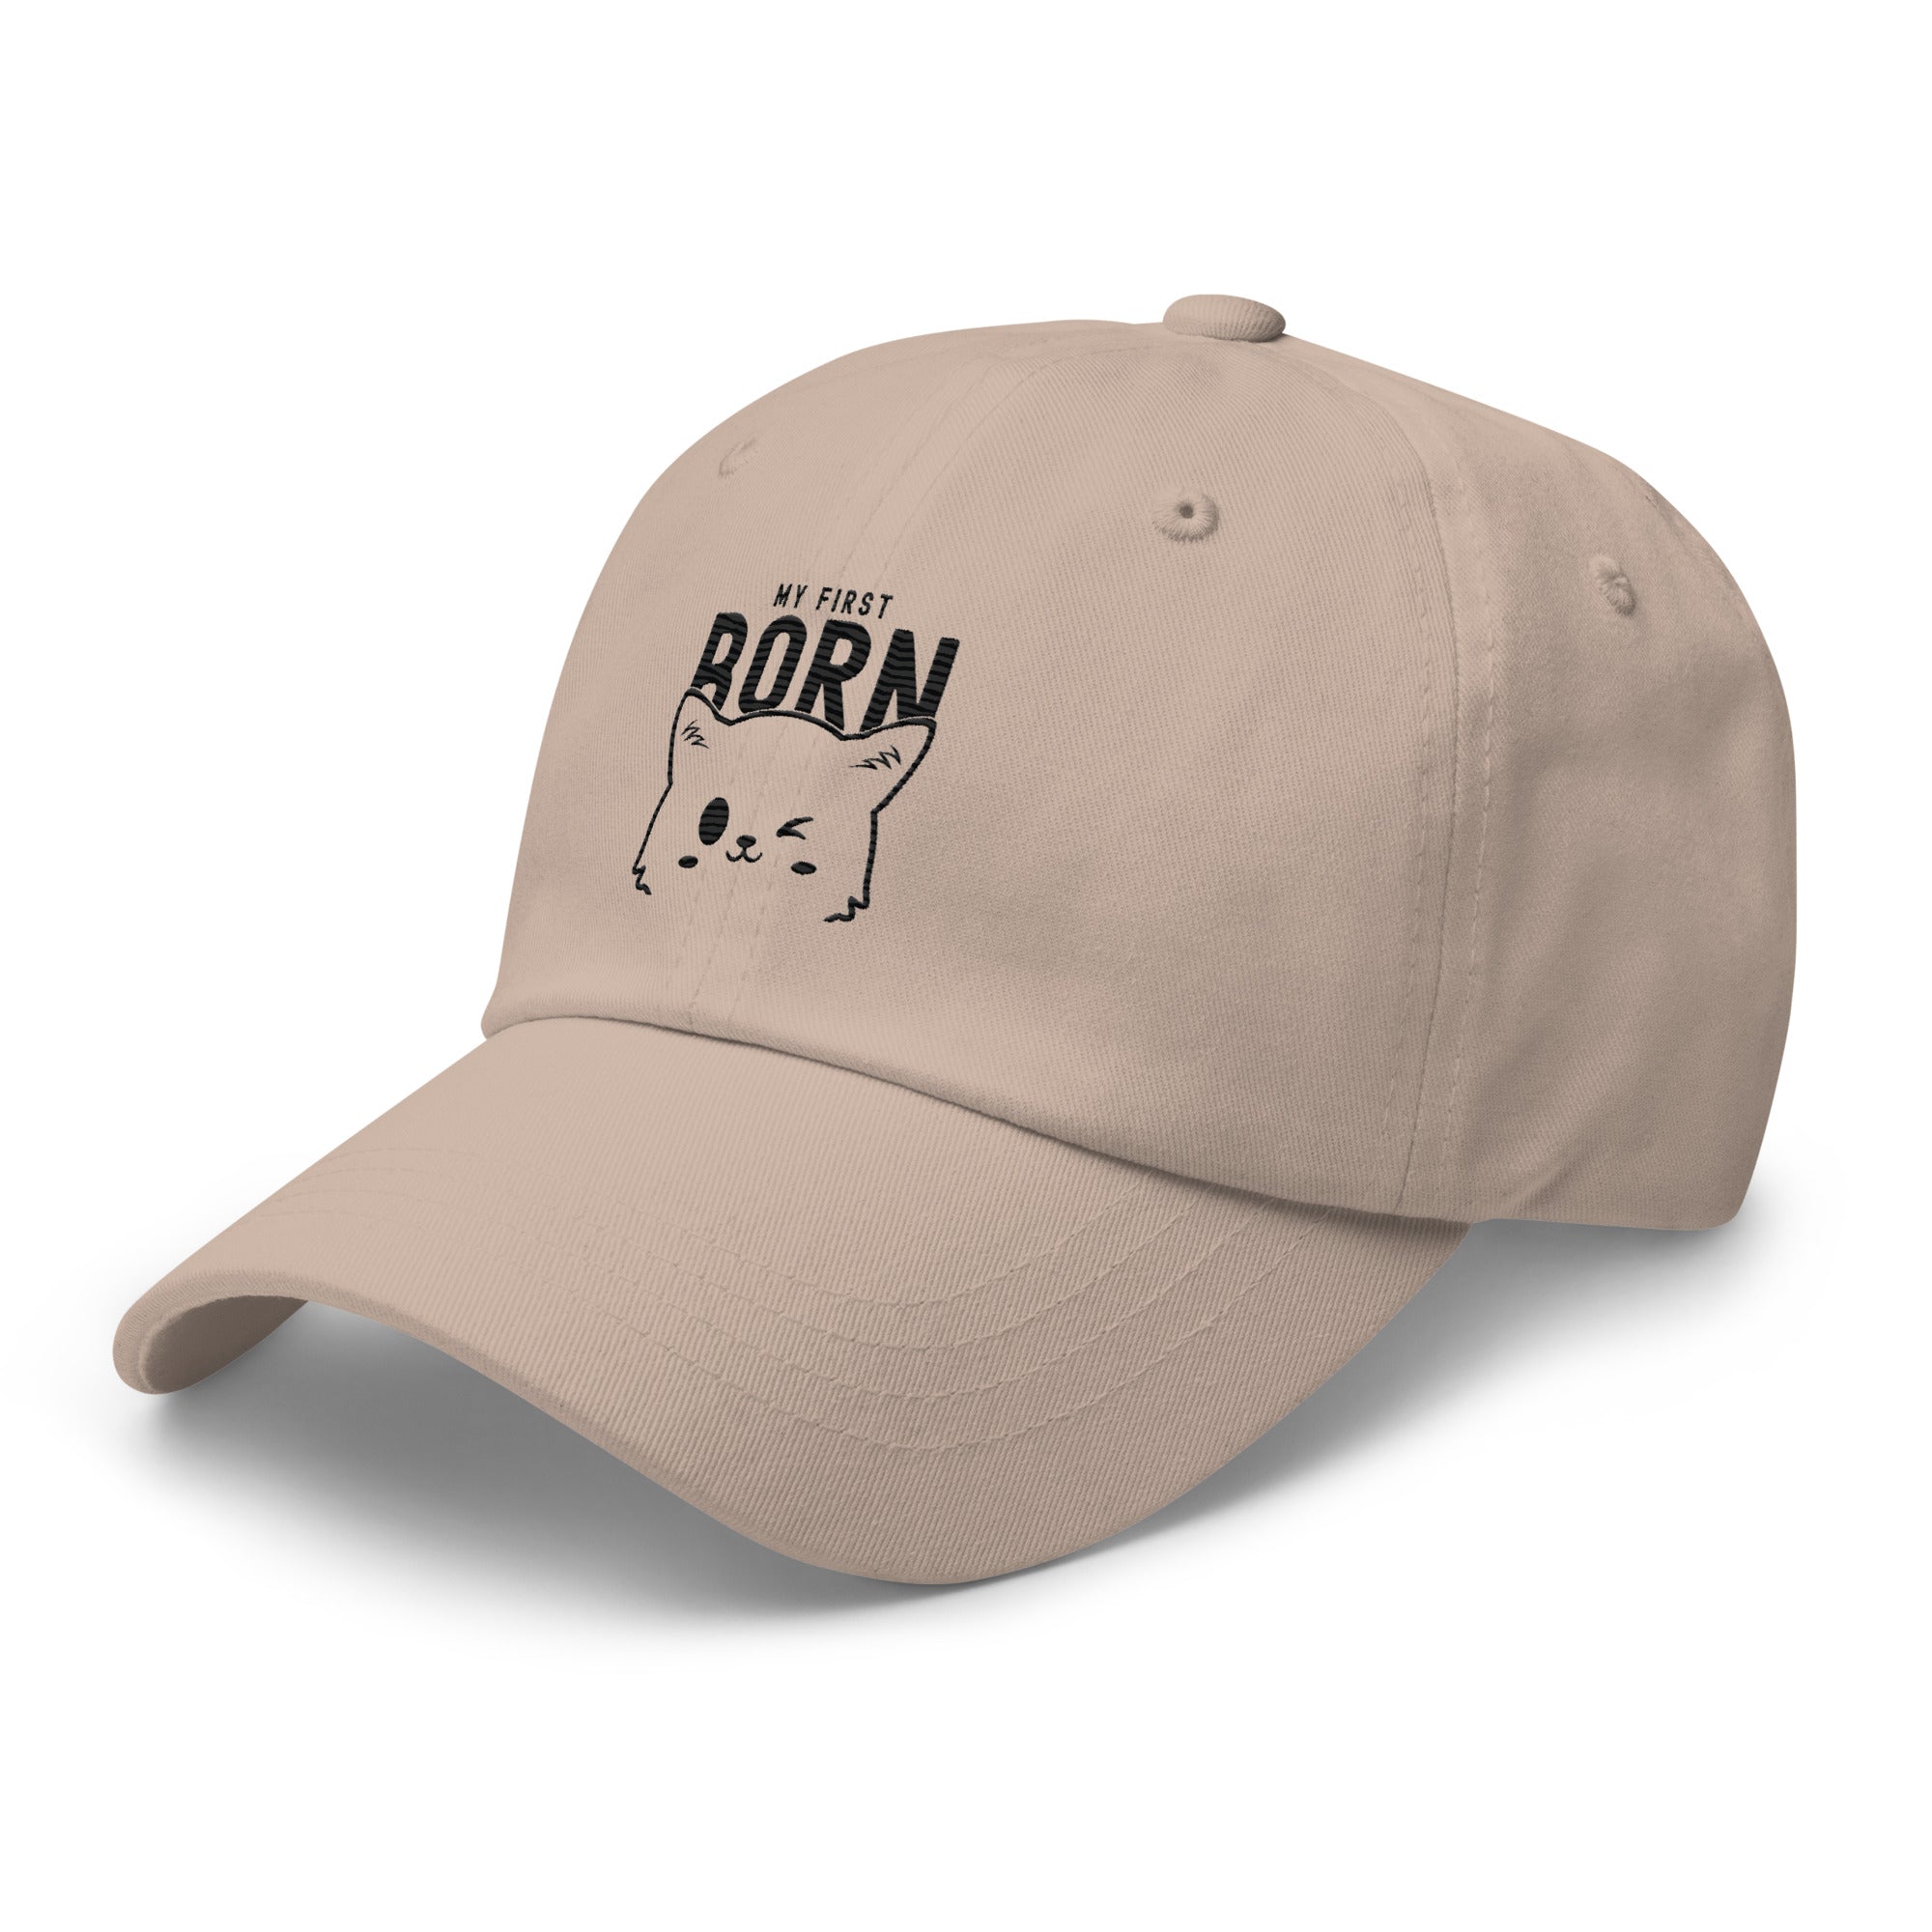 Hat | My First Born (cat)